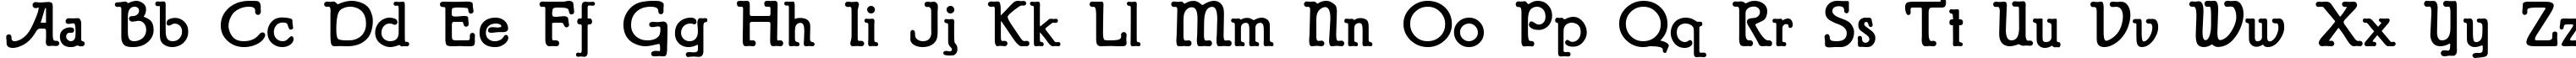 Пример написания английского алфавита шрифтом Puritan Alternate Bold